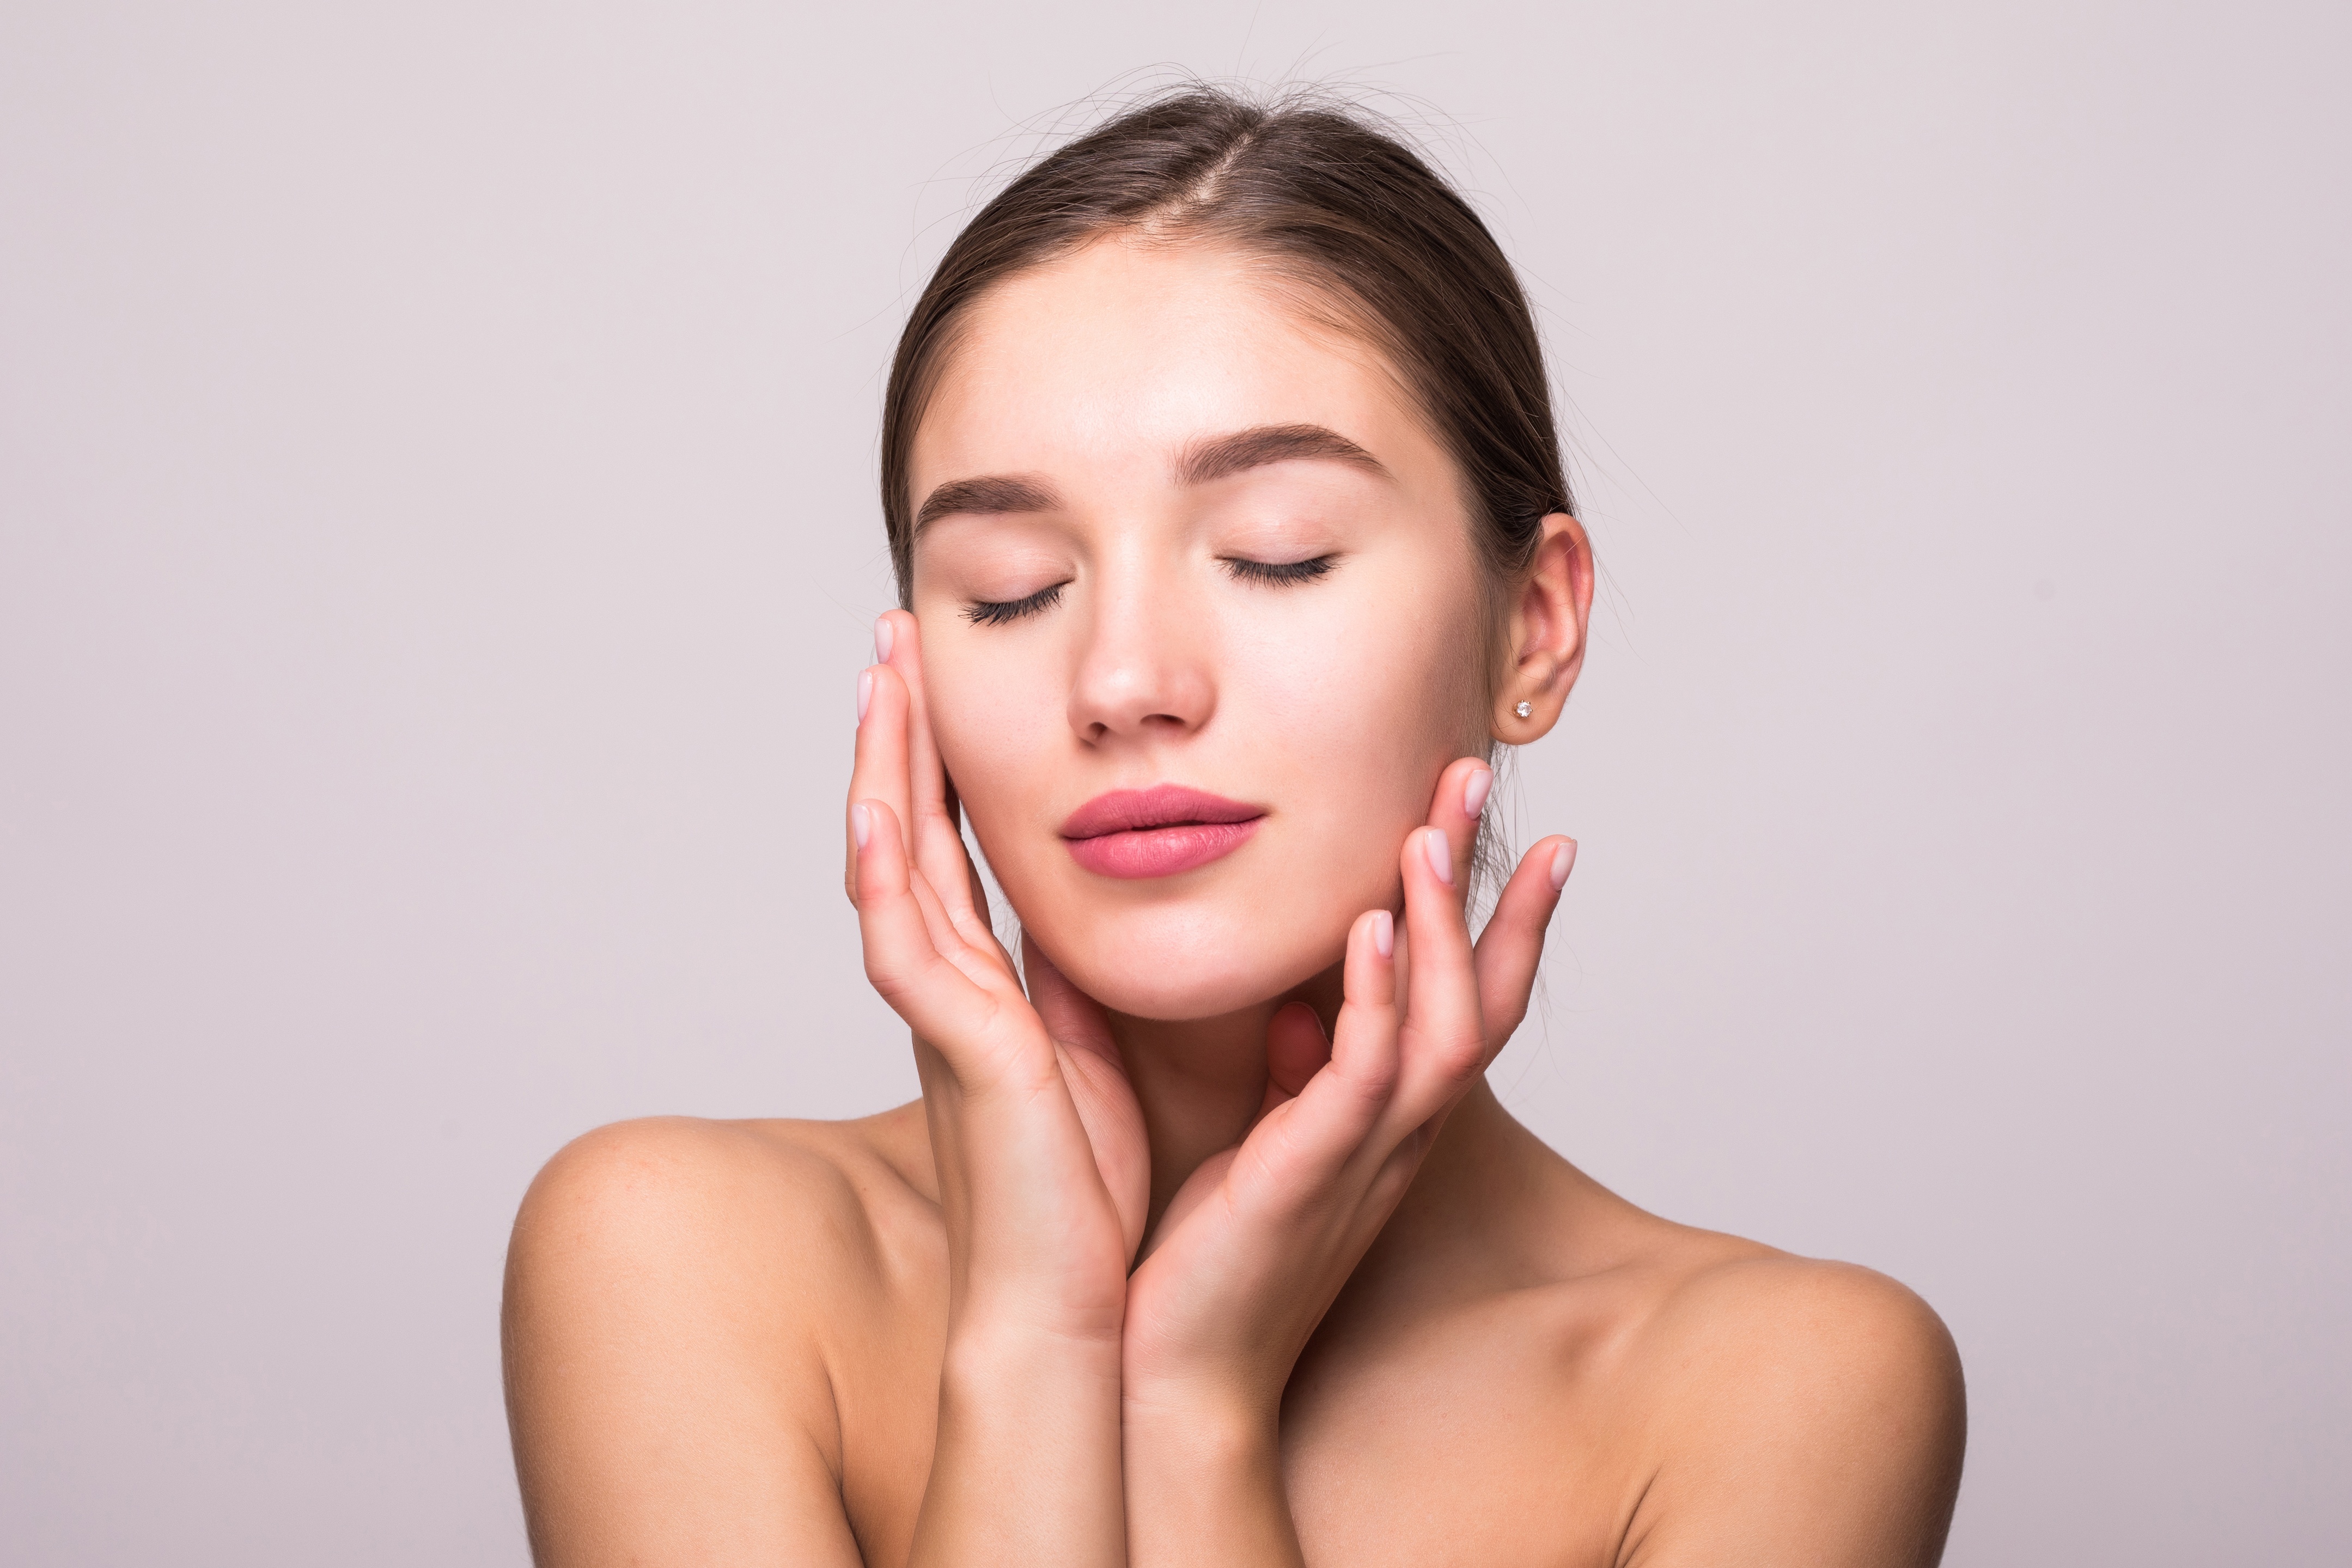 How should I maintain acne prone skin?